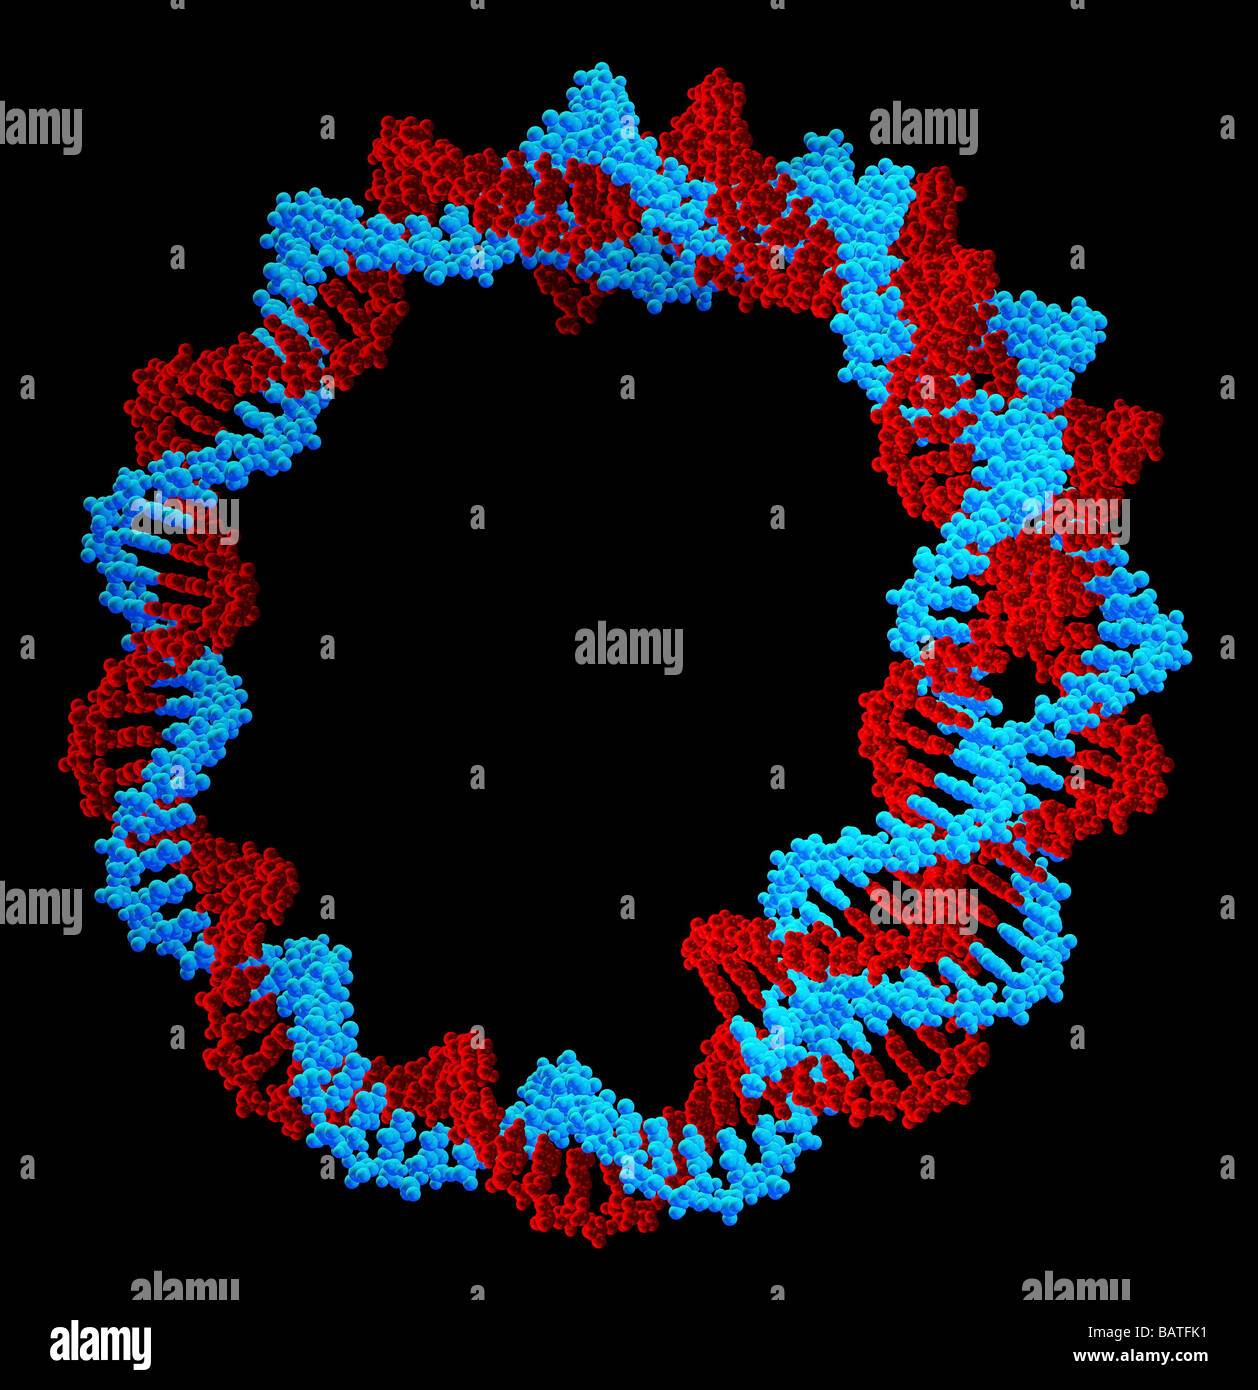 Circular DNA (deoxyribonucleic acid) molecule,computer artwork. Circular DNA has no ends, but consists of a ring structure. Stock Photo